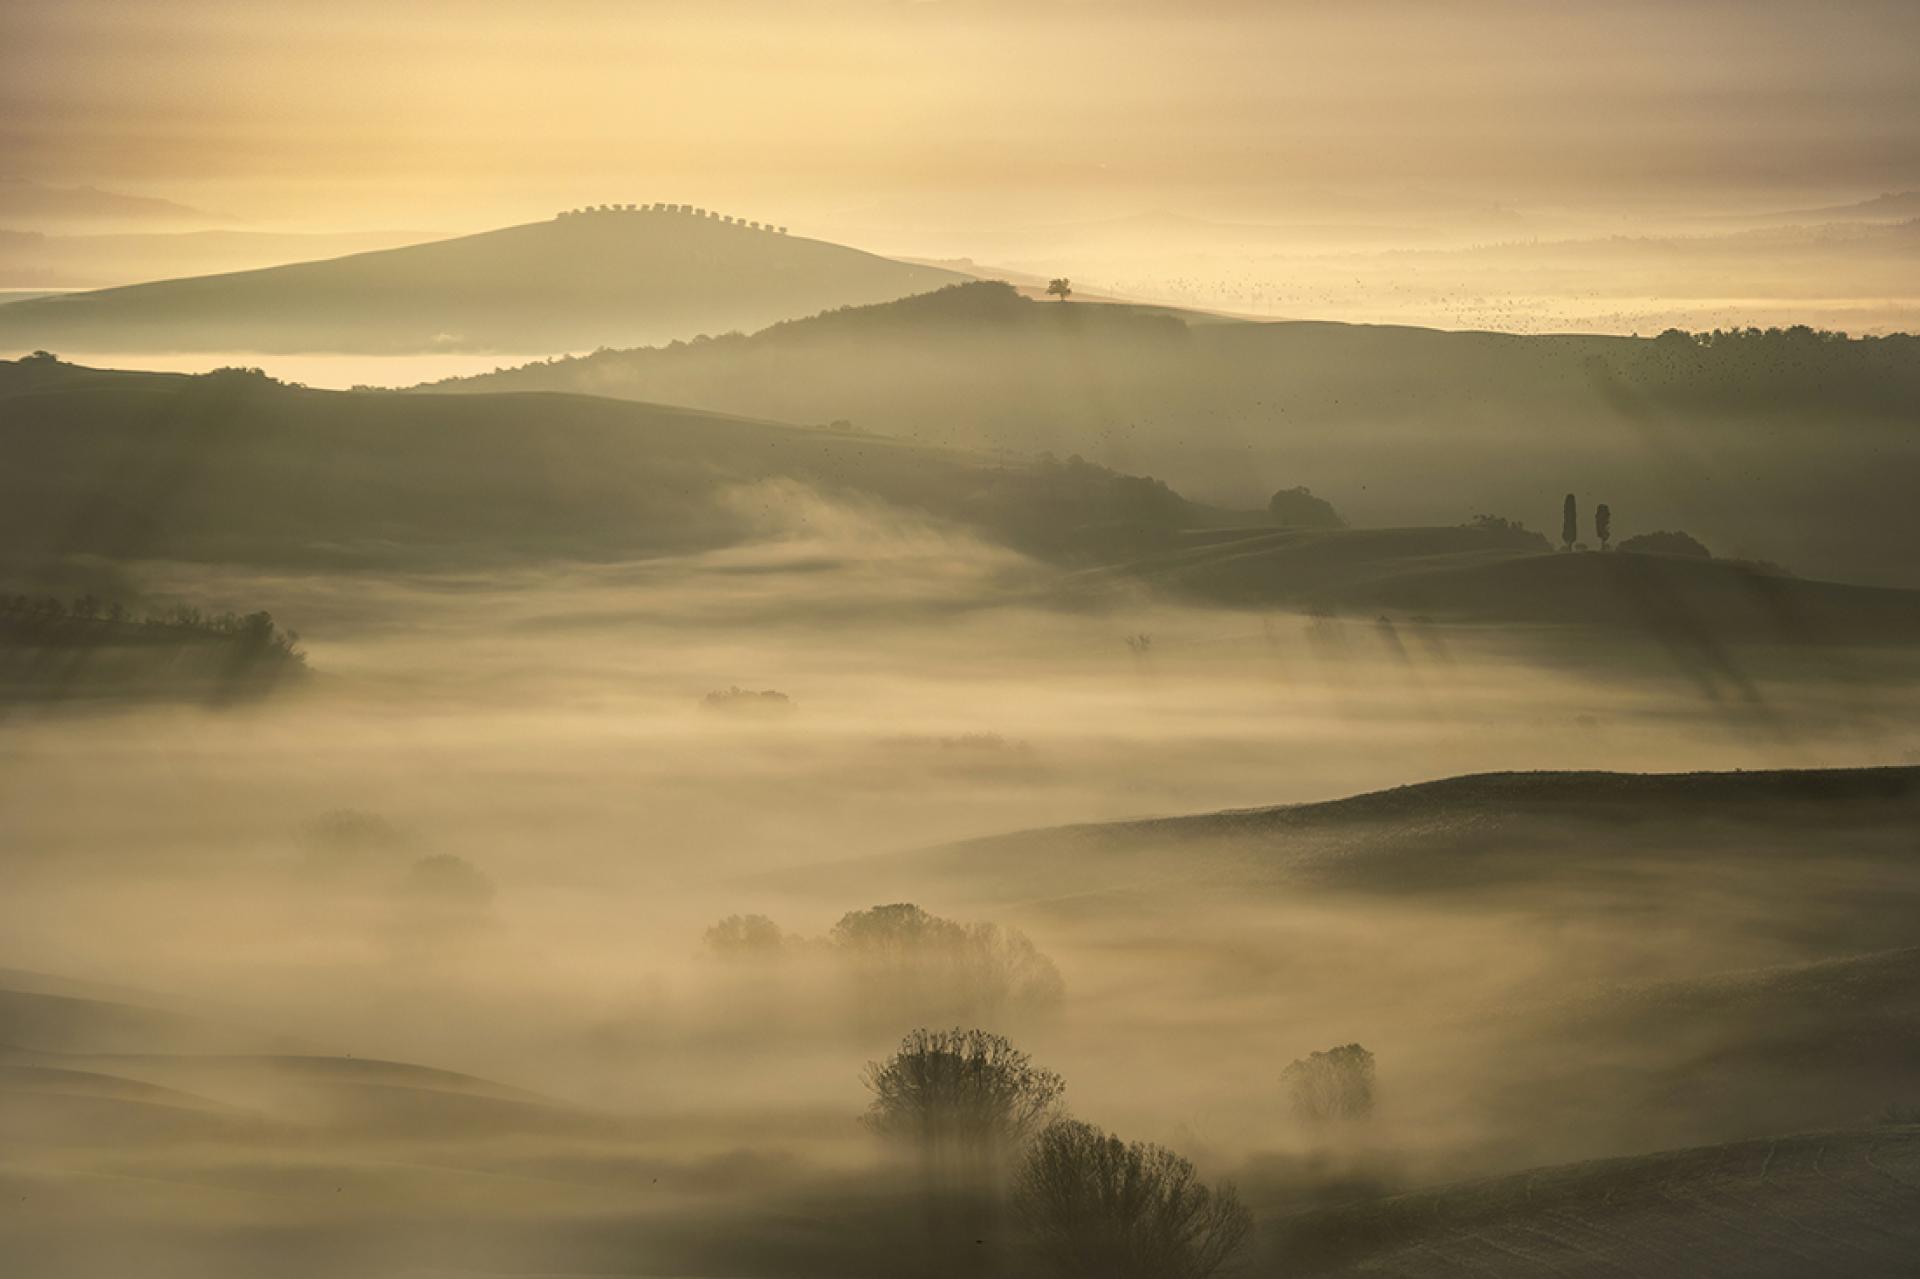 New York Photography Awards Winner - Light and Fog in Tuscany